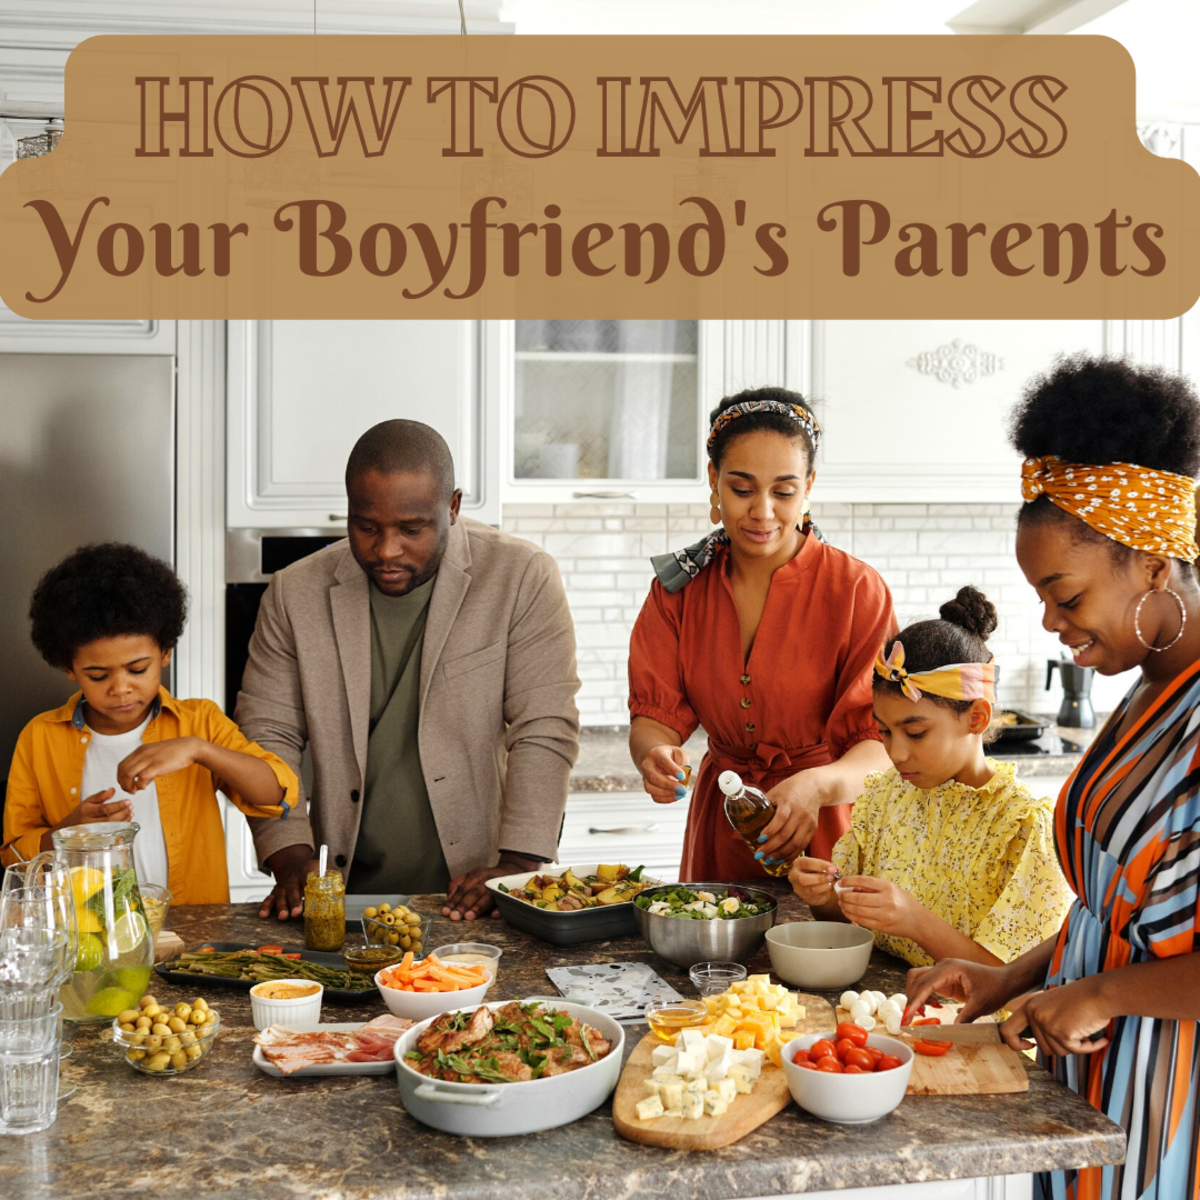 How can I impress my boyfriends parents?